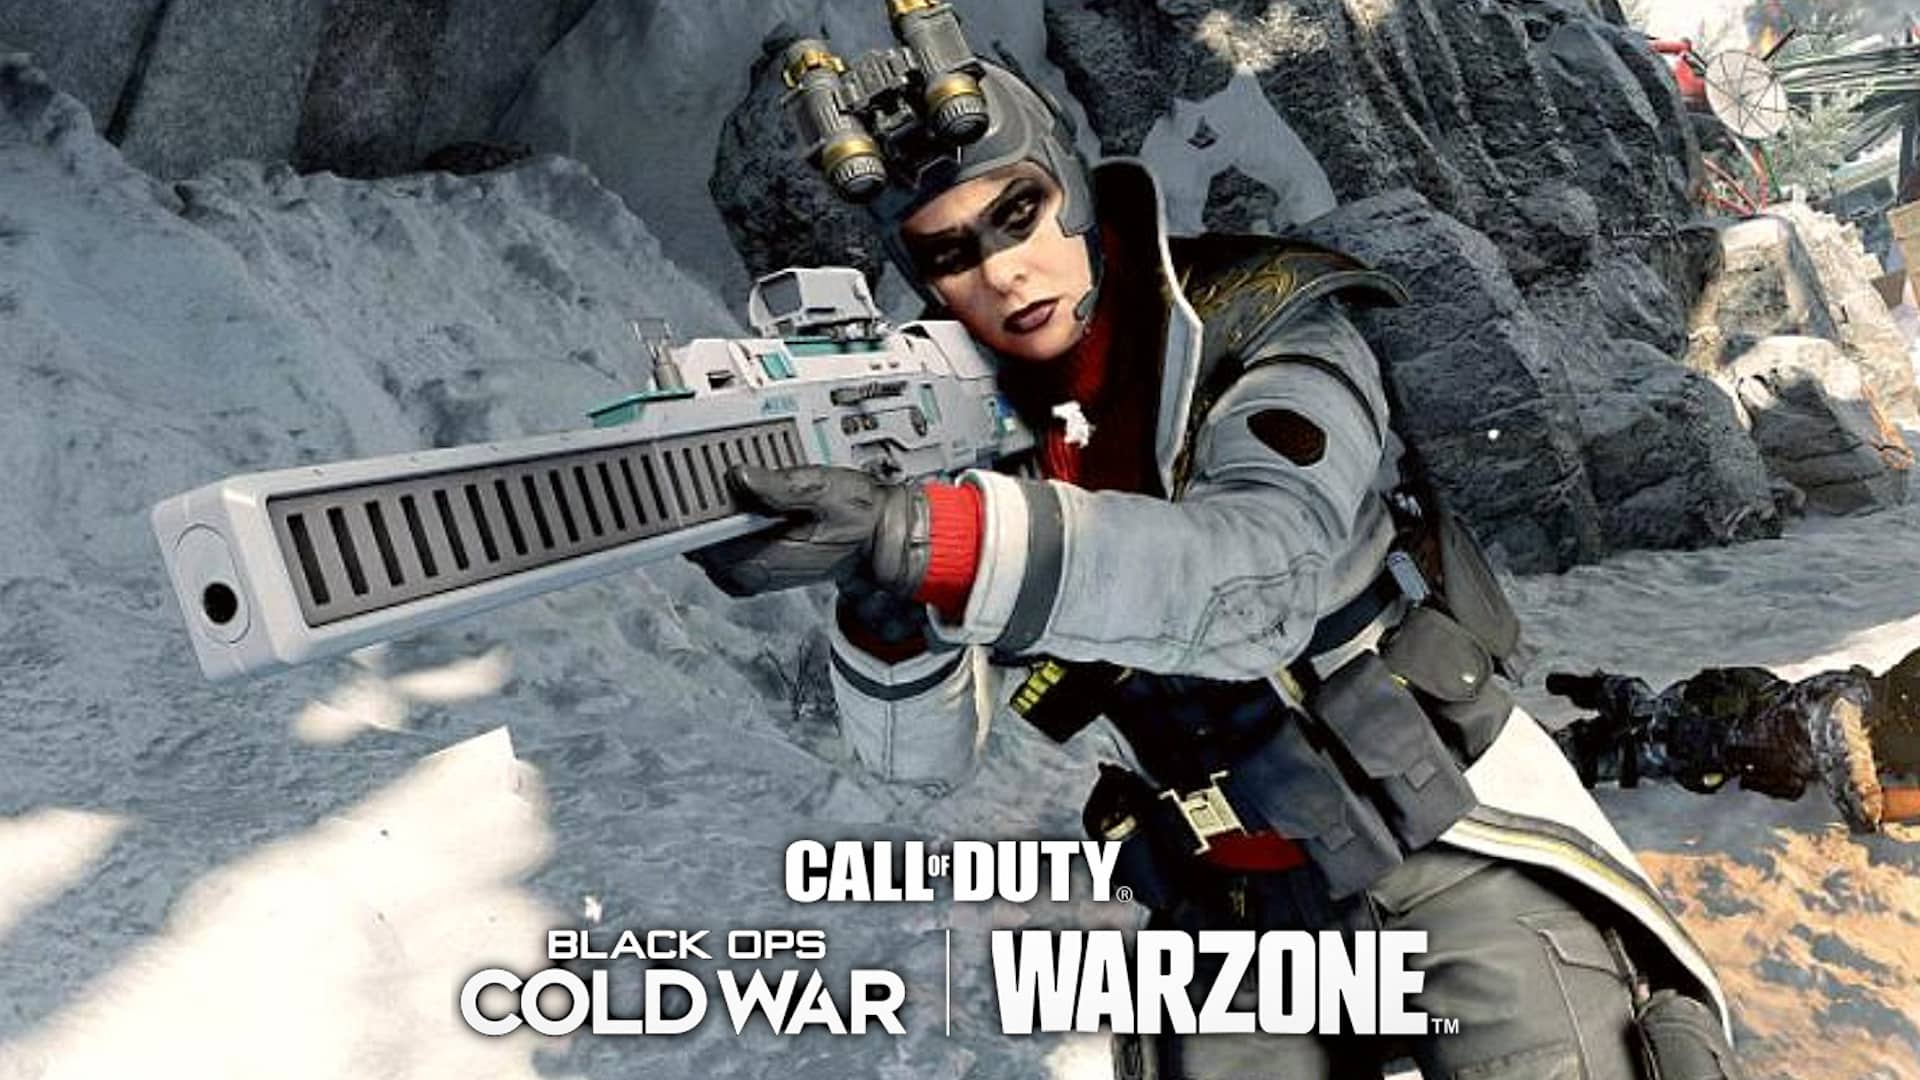 carv2 unlock black ops cold war warzone